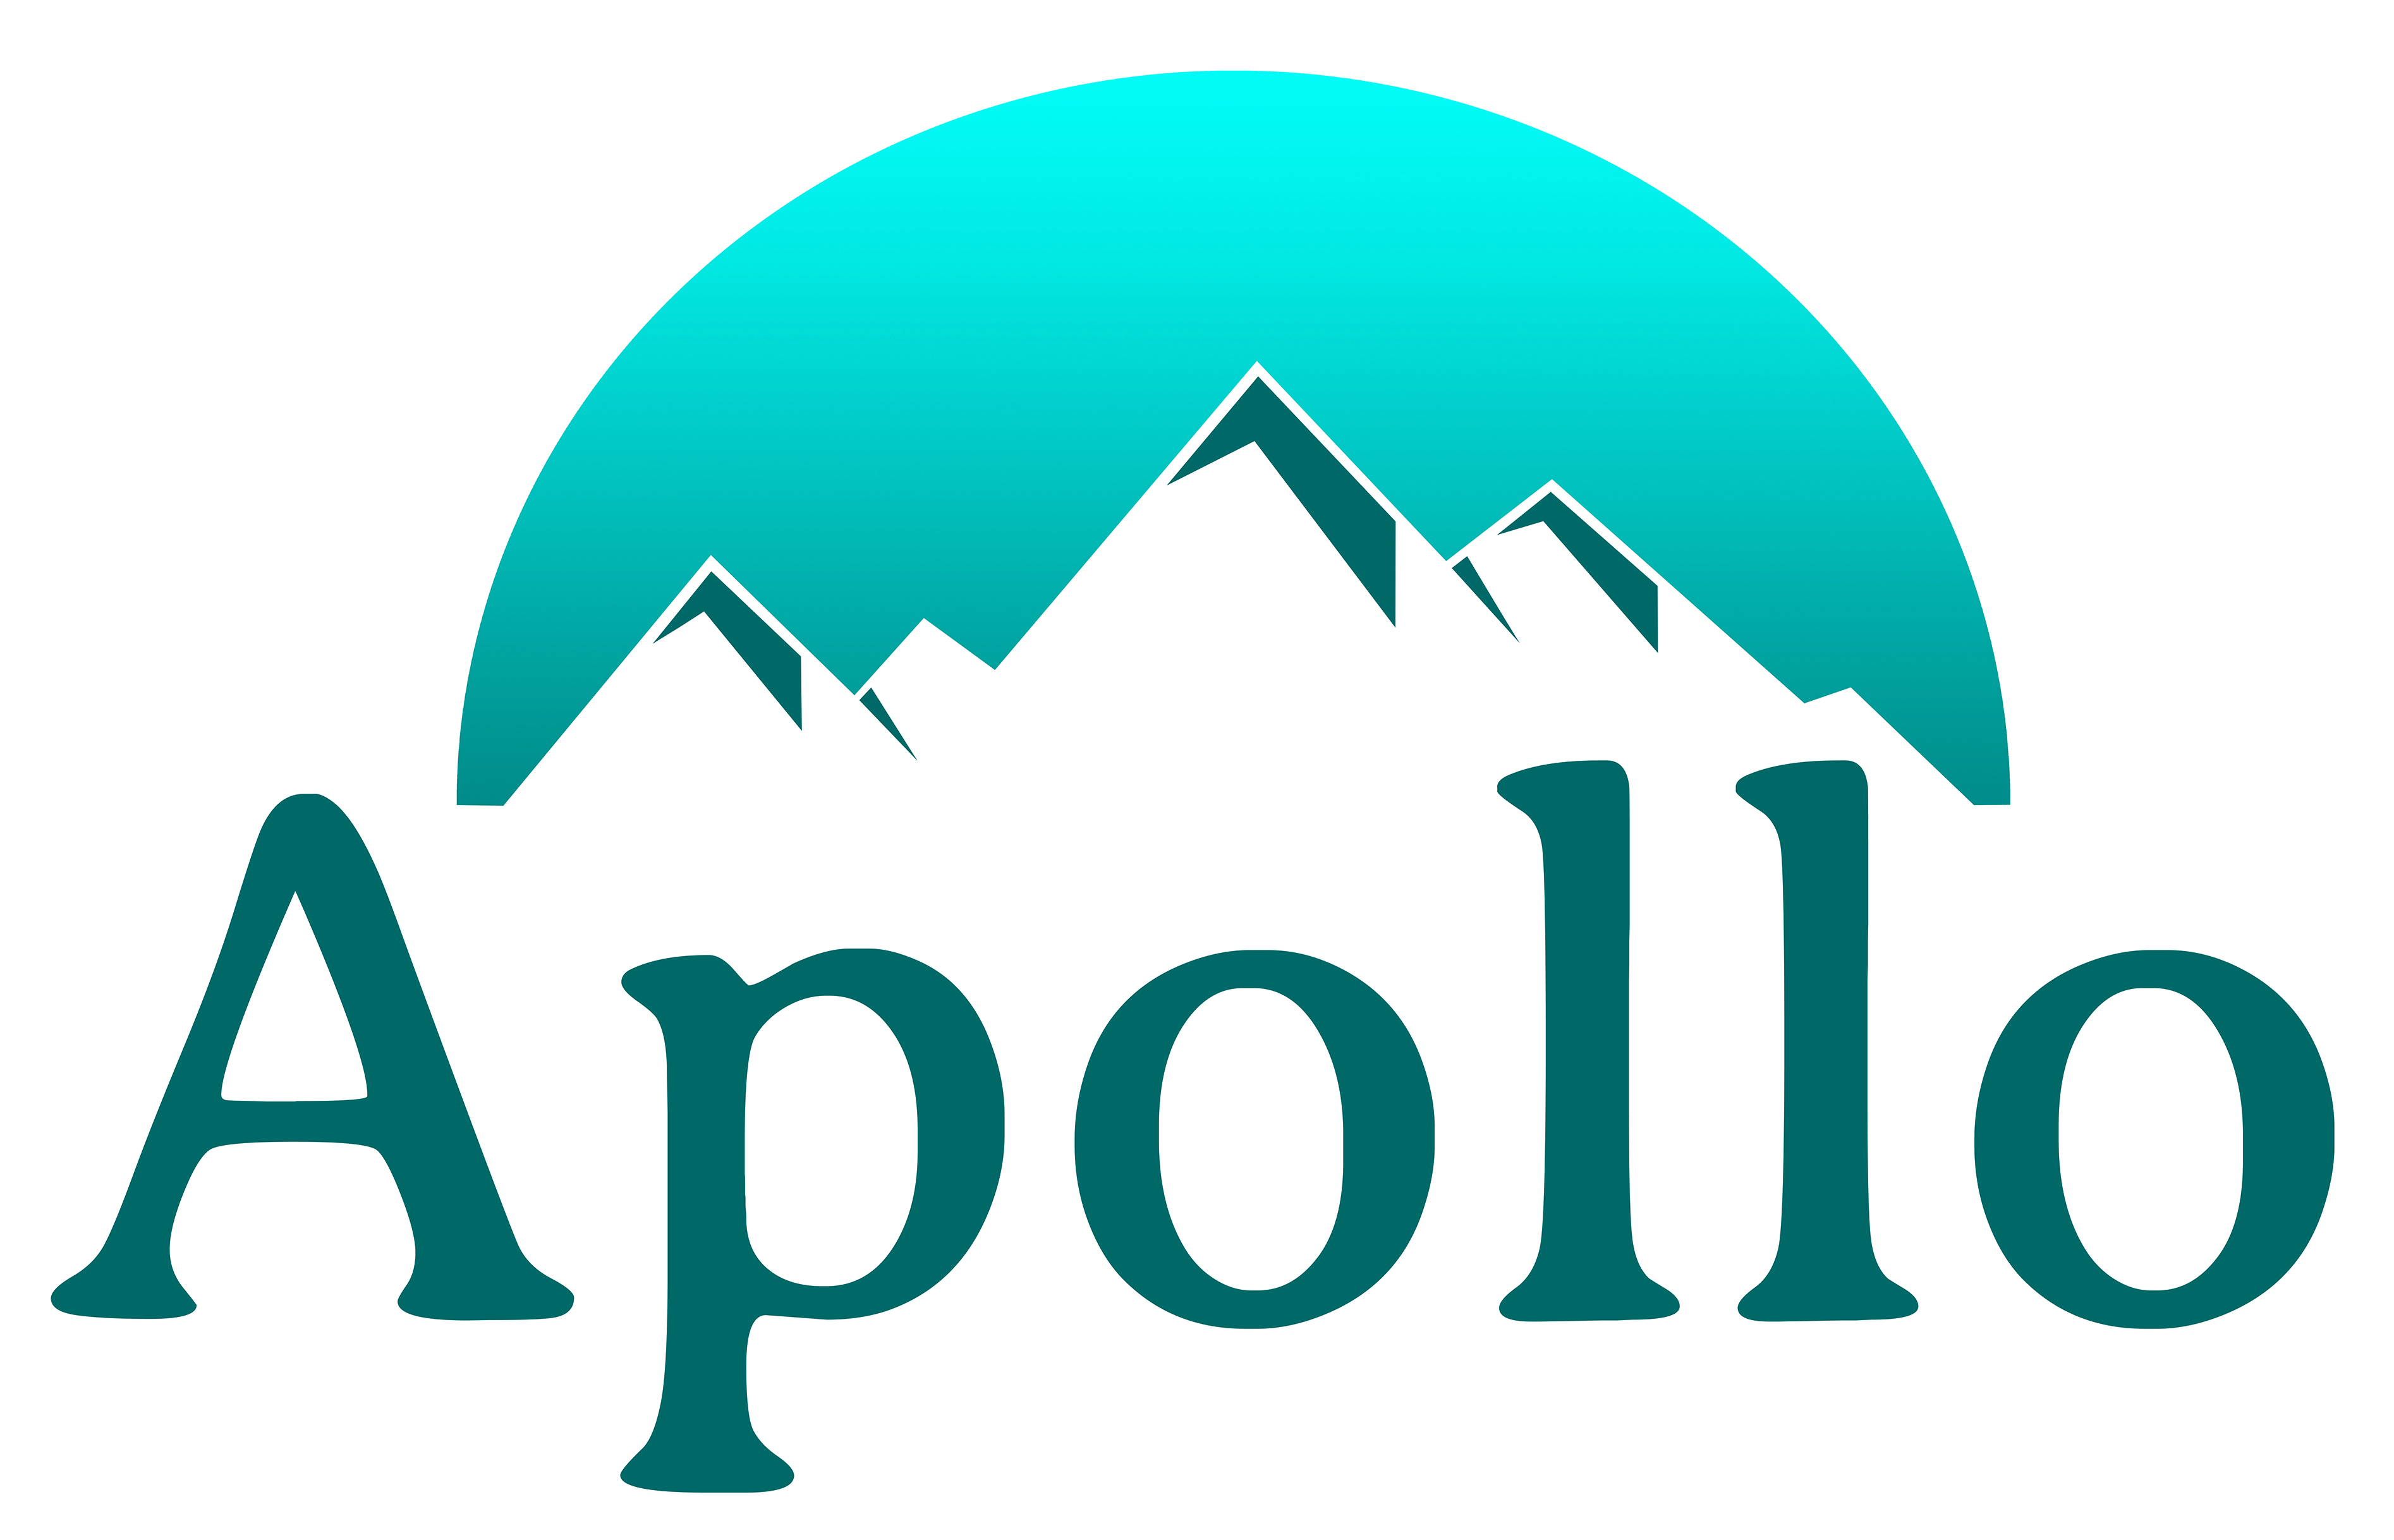 Apollo logo HI RES JPG.jpg